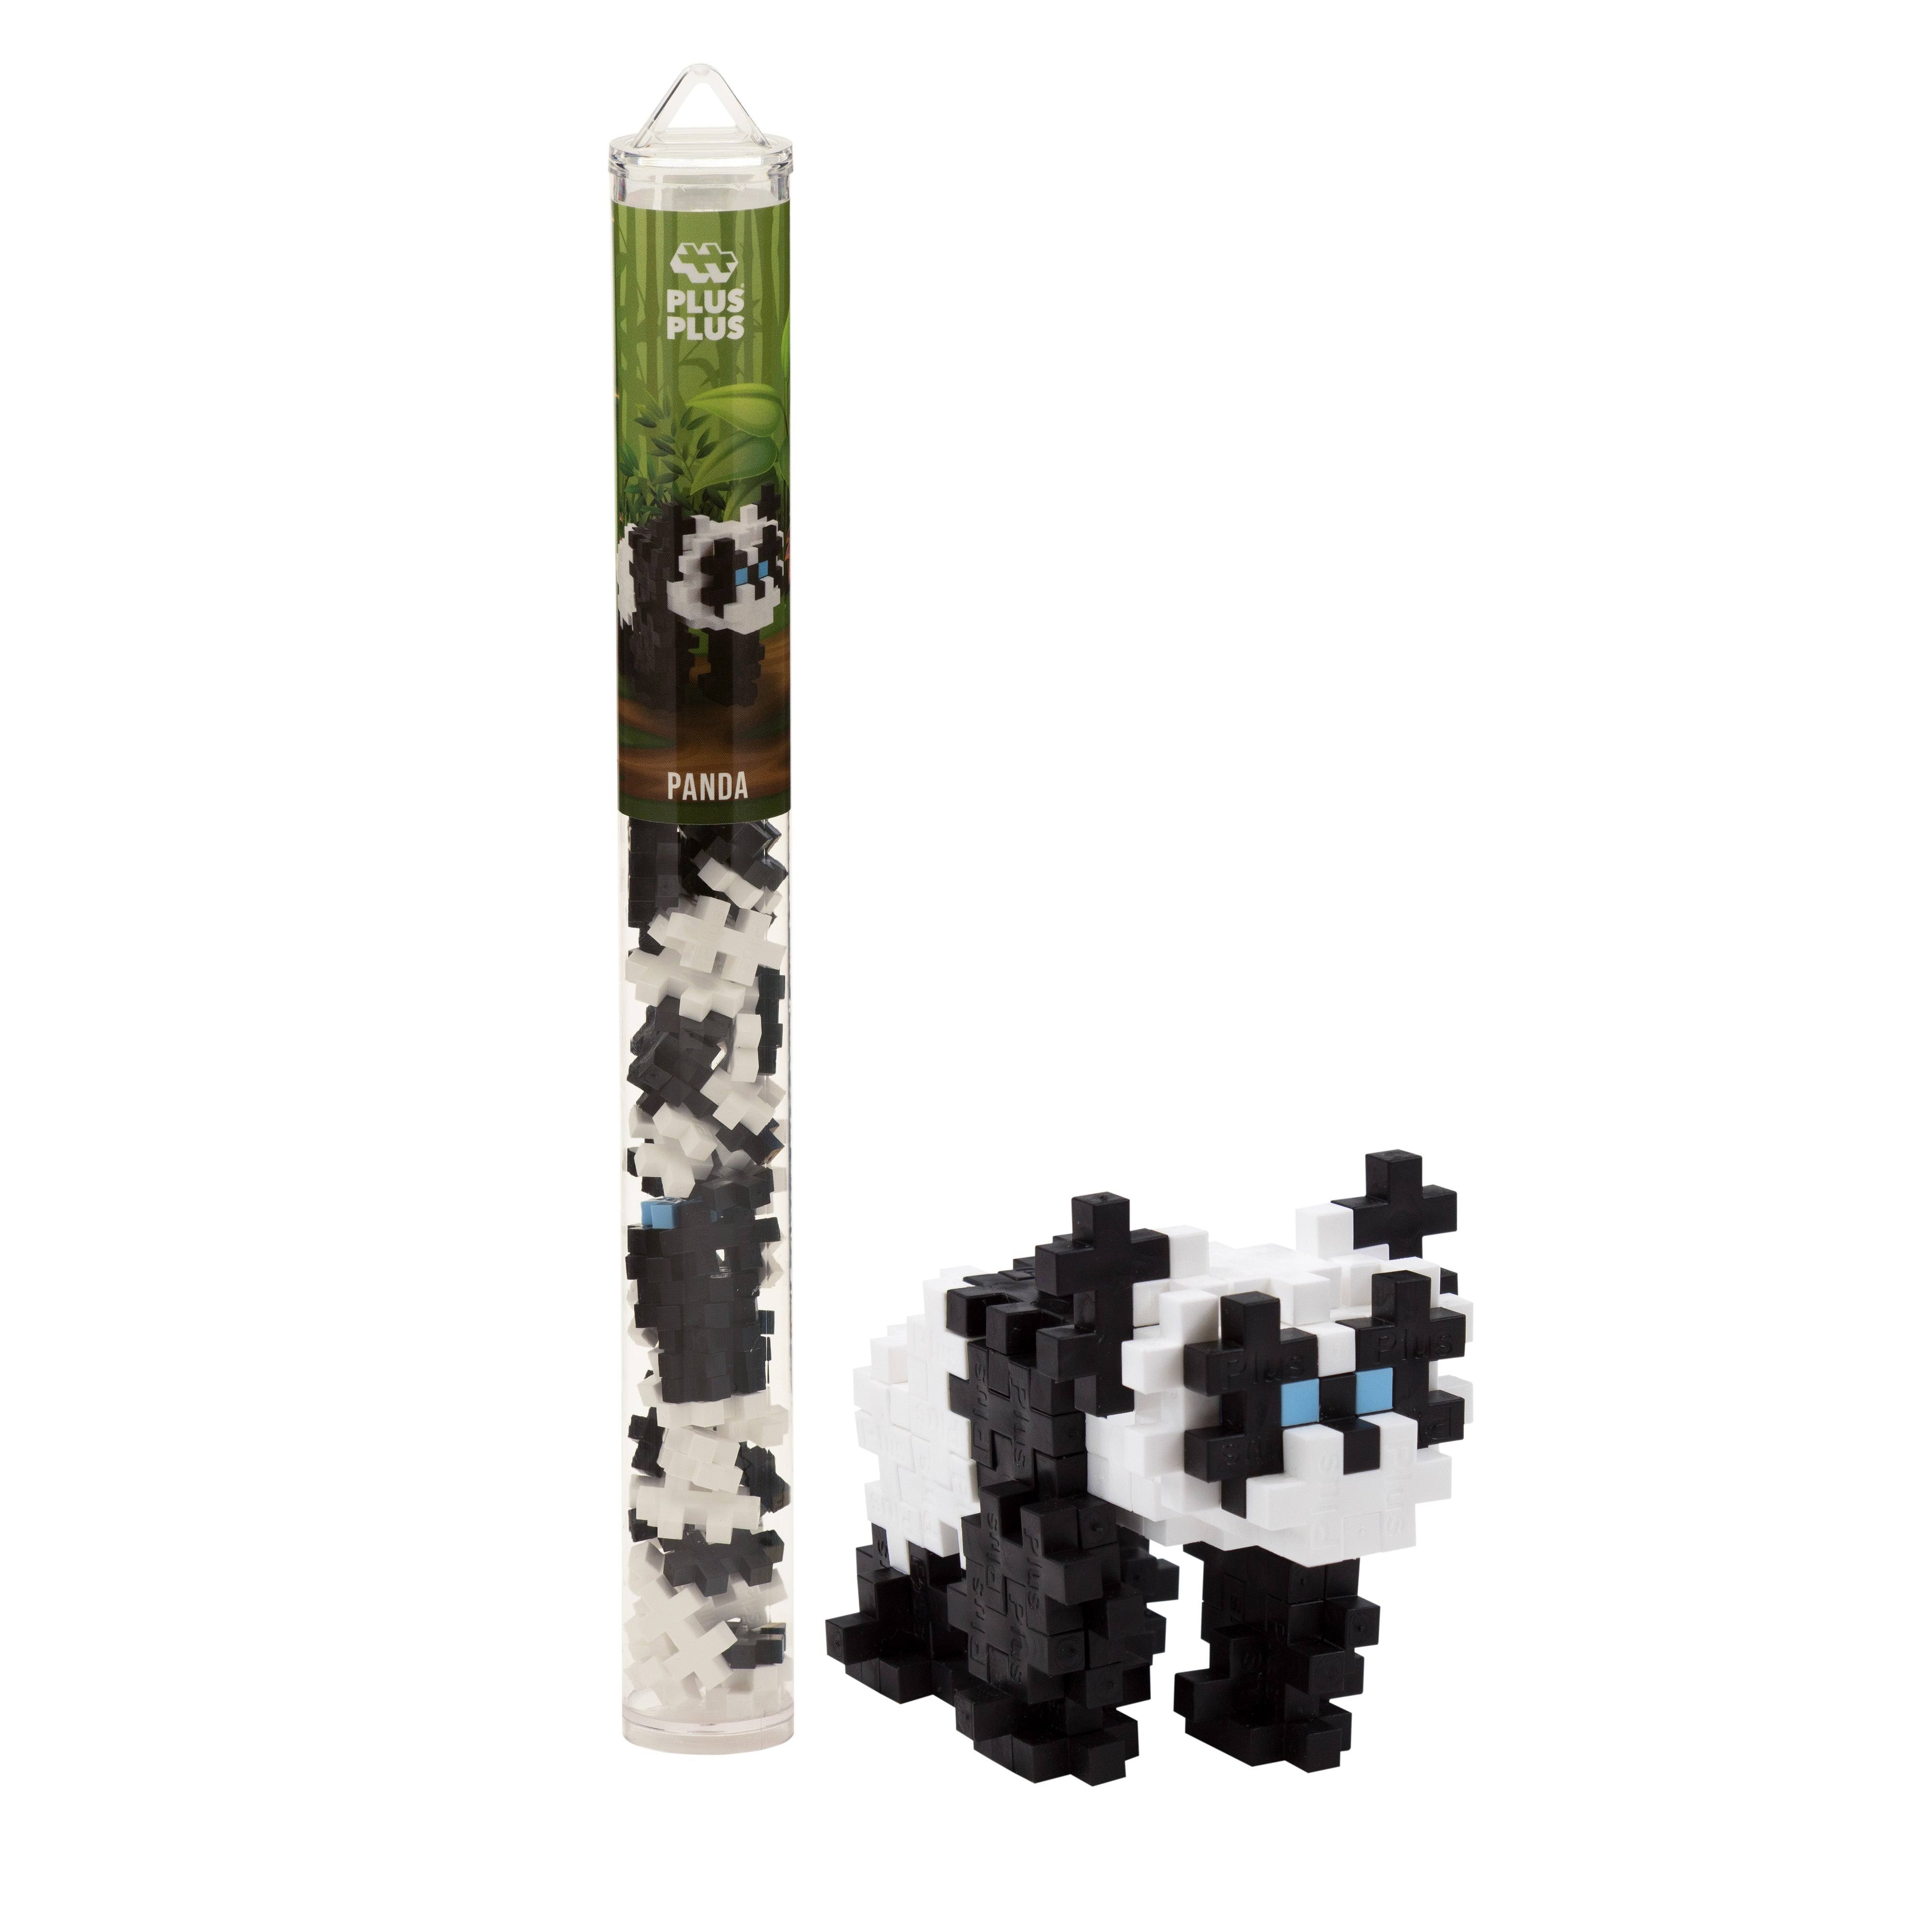 Plus Plus – Mini Maker Tube – Panda – 70 Piece, Construction Building Stem | Steam Toy, Interlocking Mini Puzzle Blocks For Kids